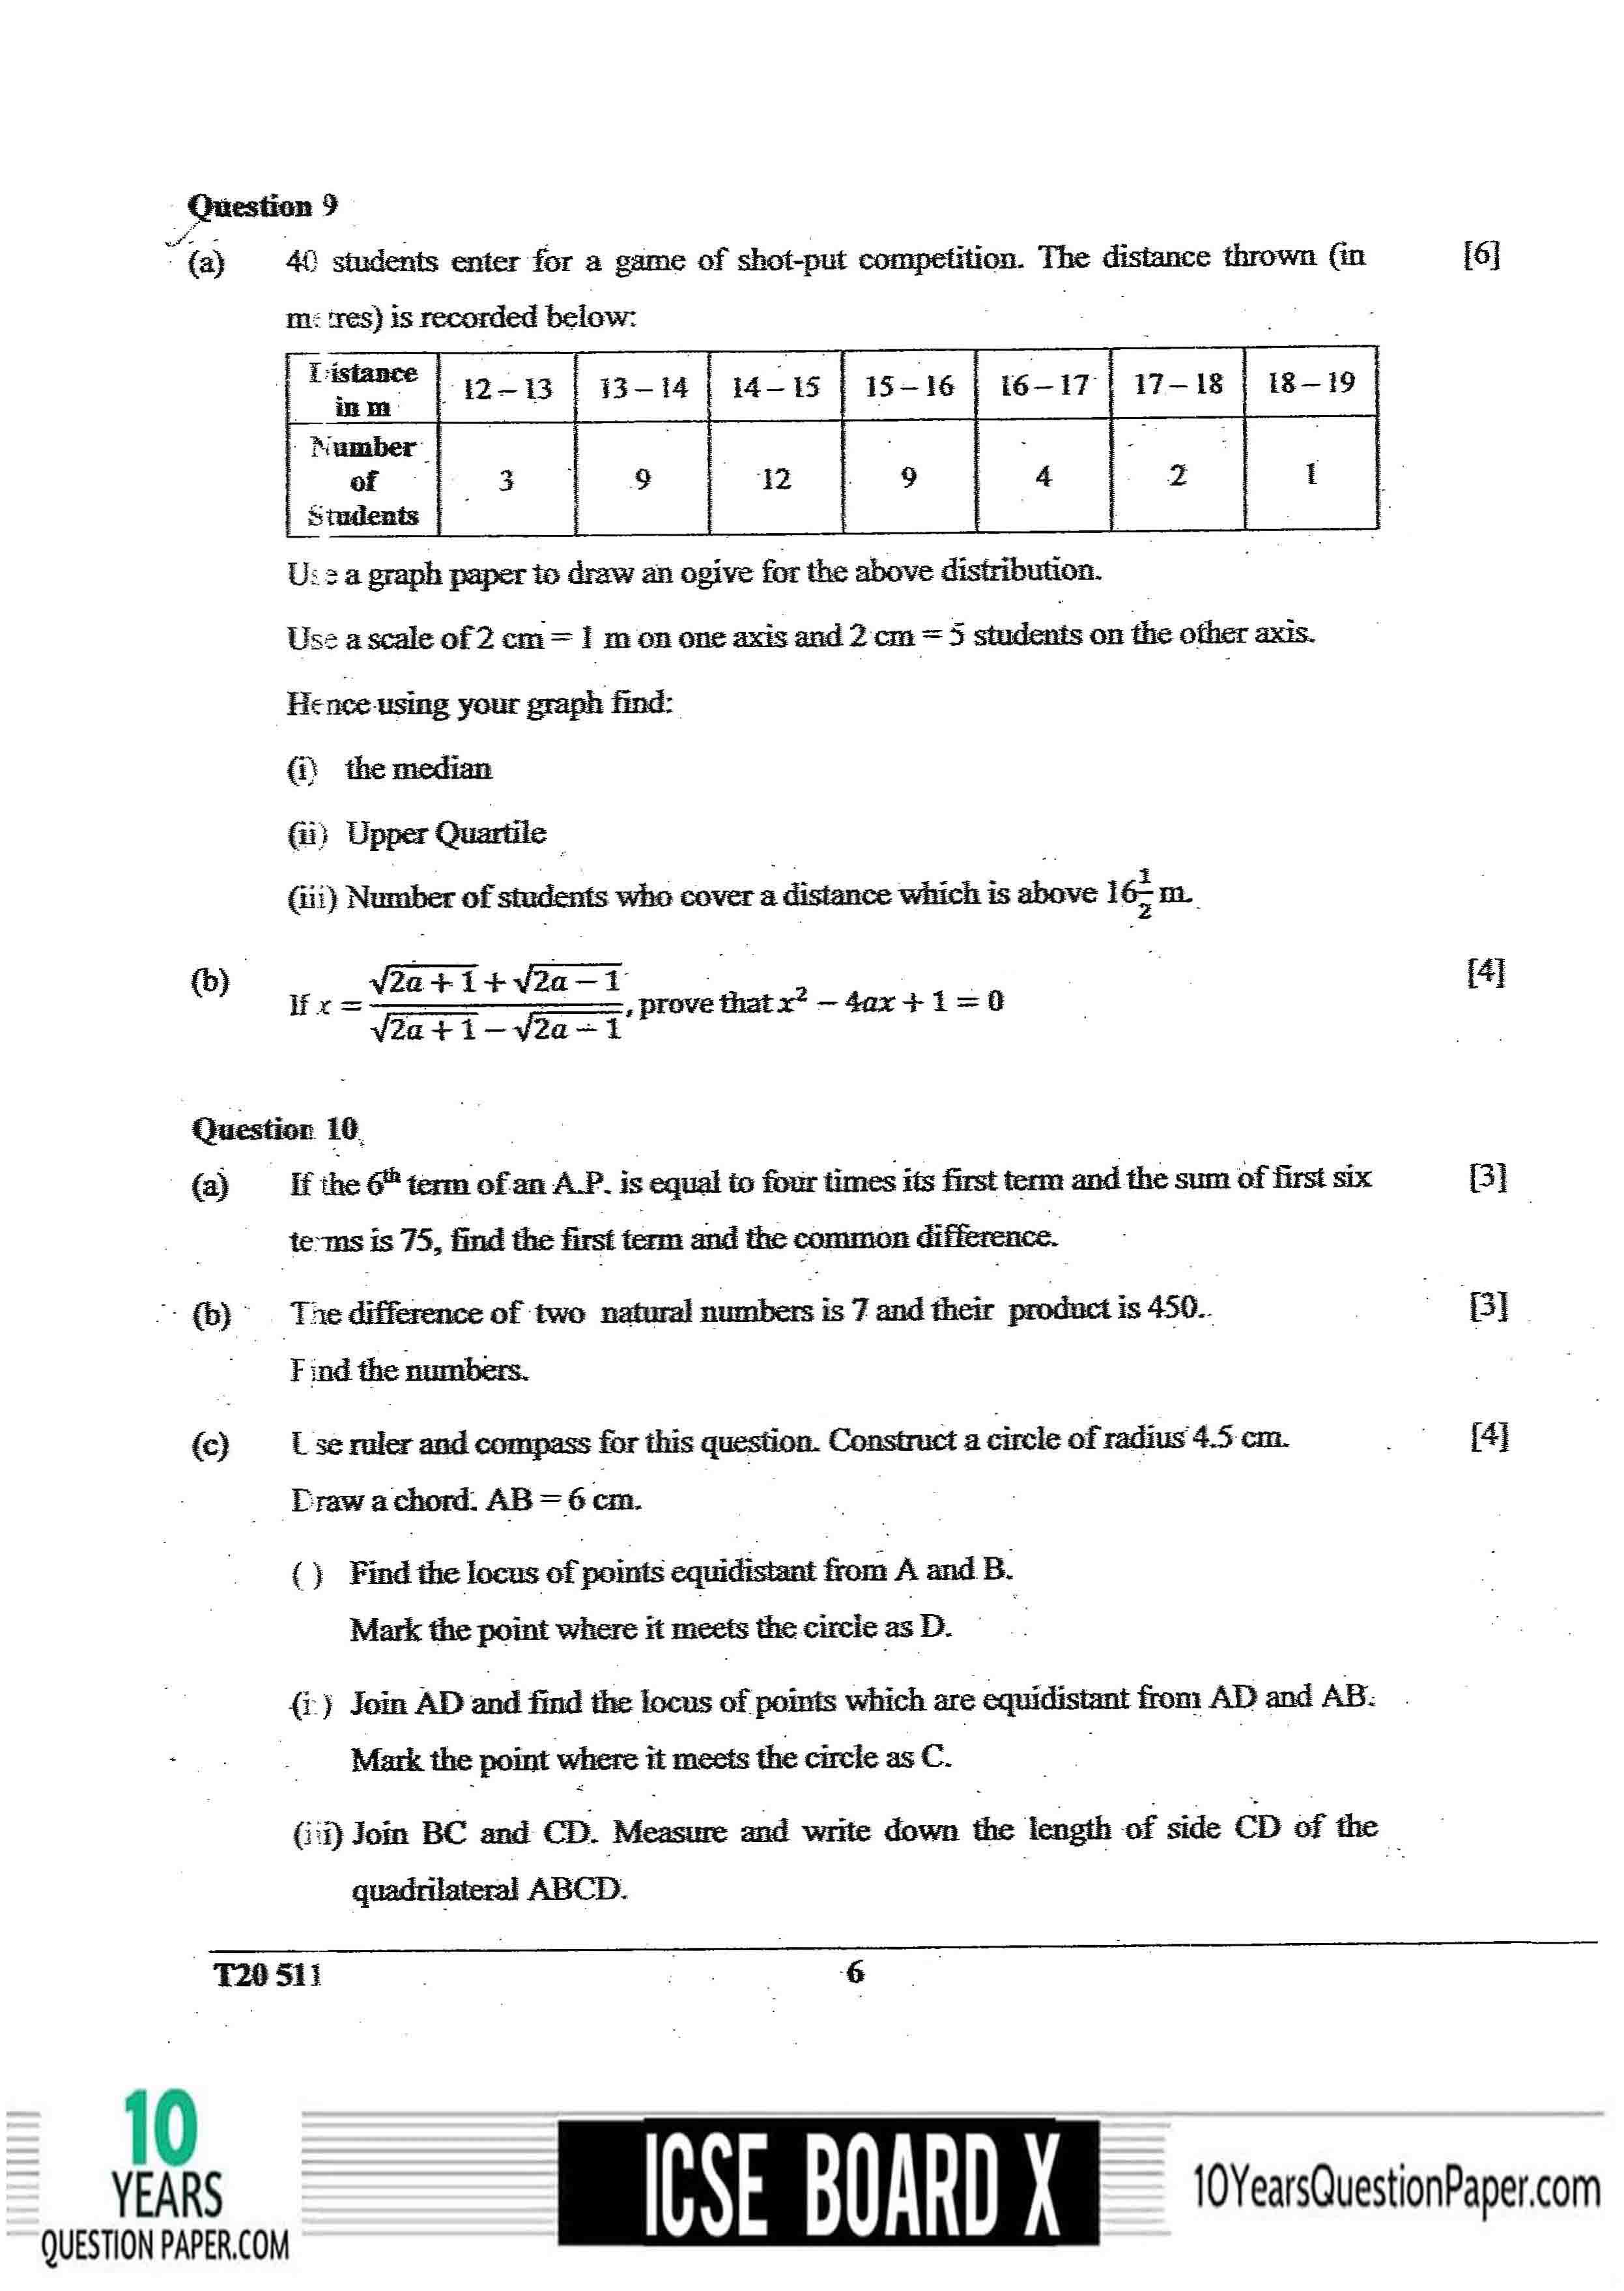 ICSE 2020 Mathematics Question Paper for Class 10